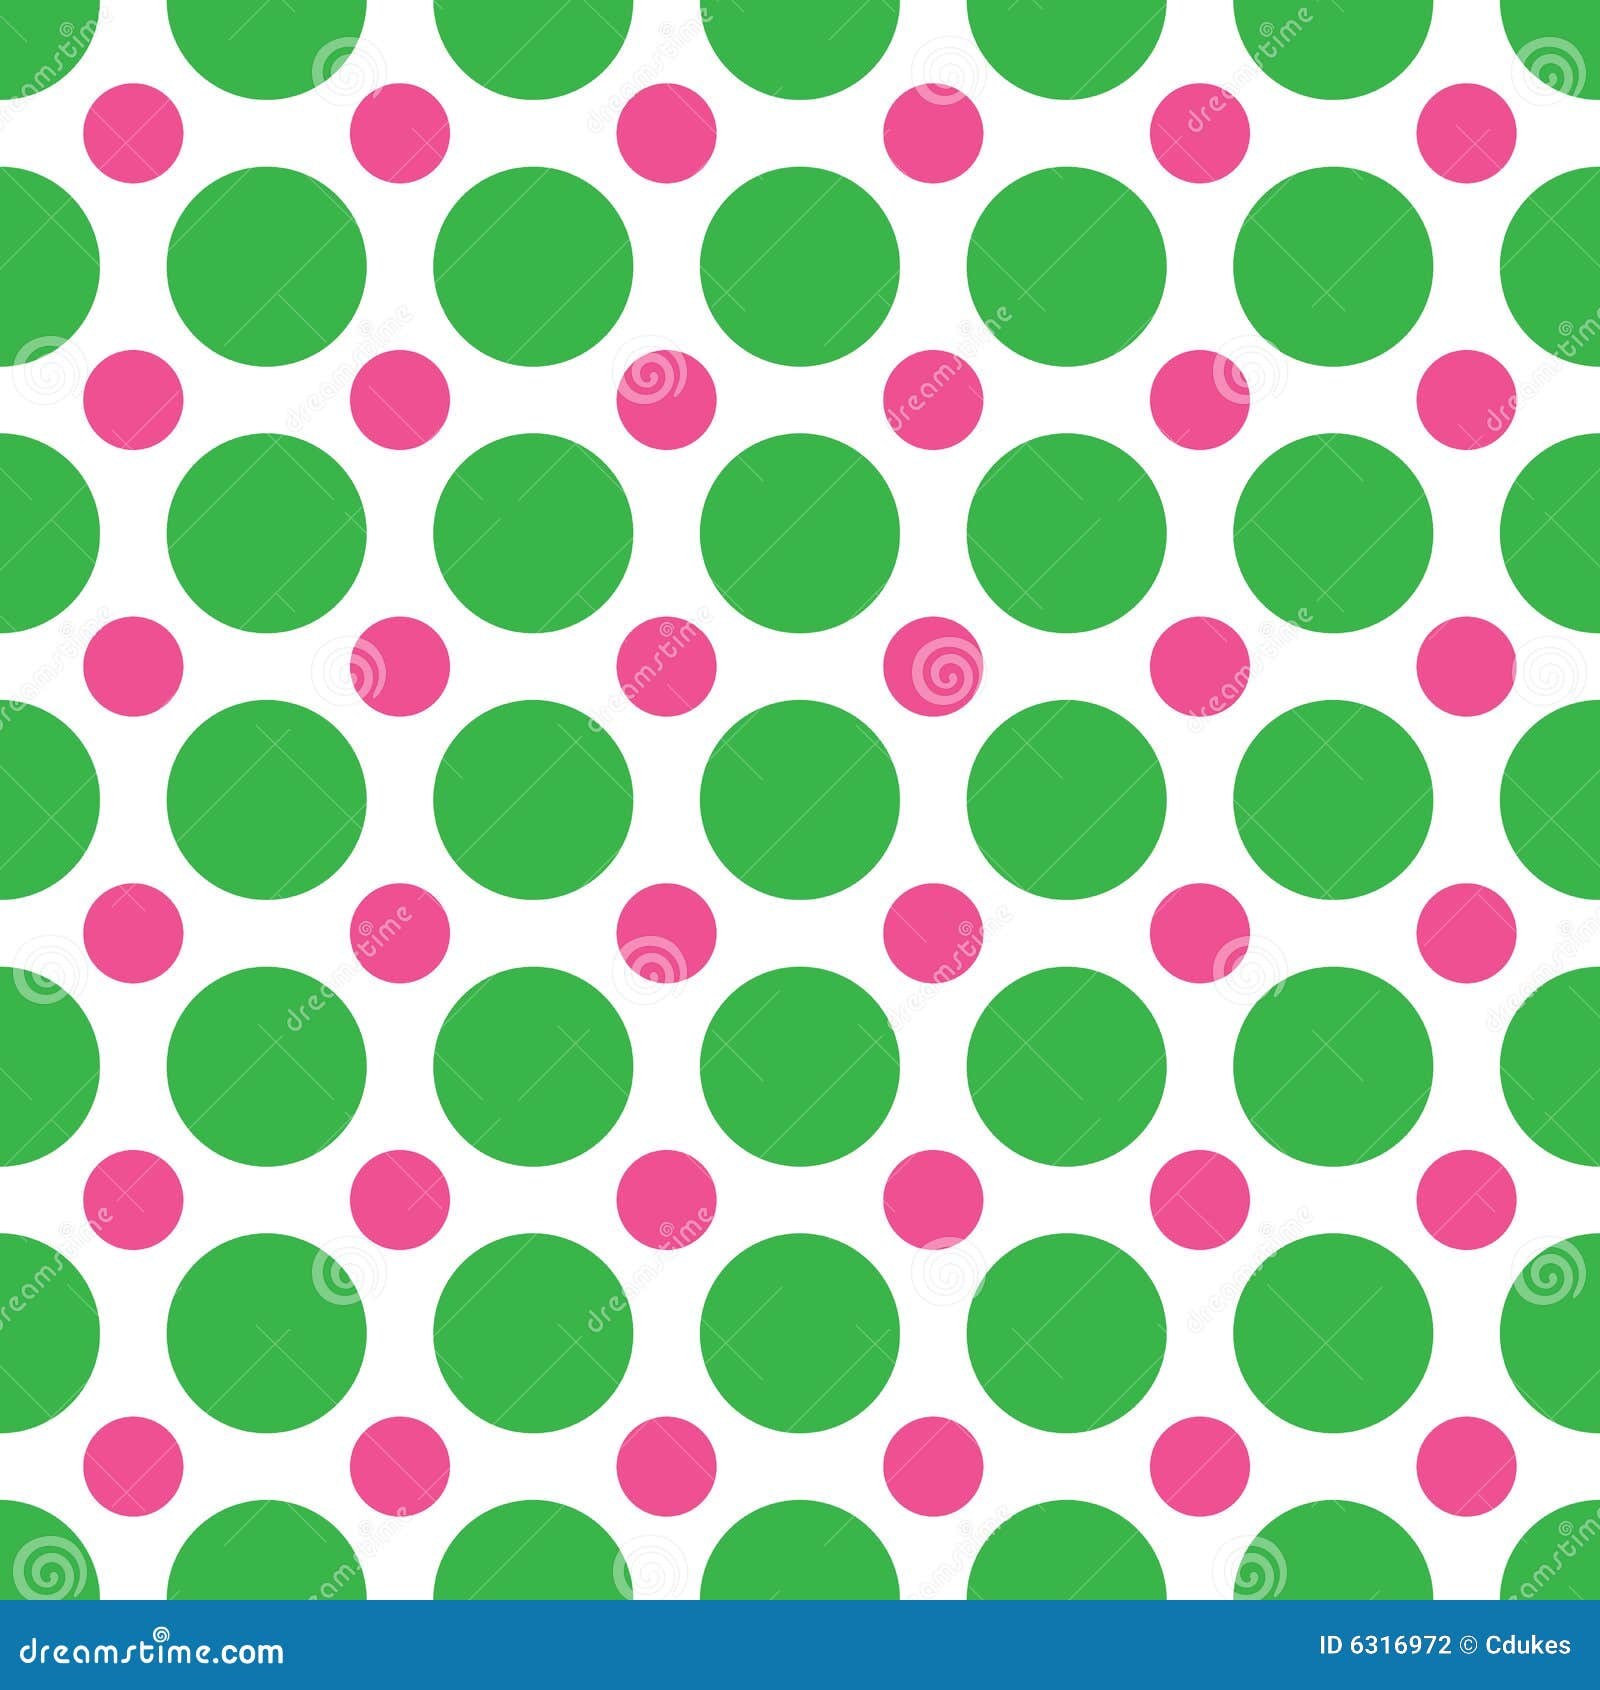 Green and Pink Polka Dots stock illustration. Illustration of pattern ...